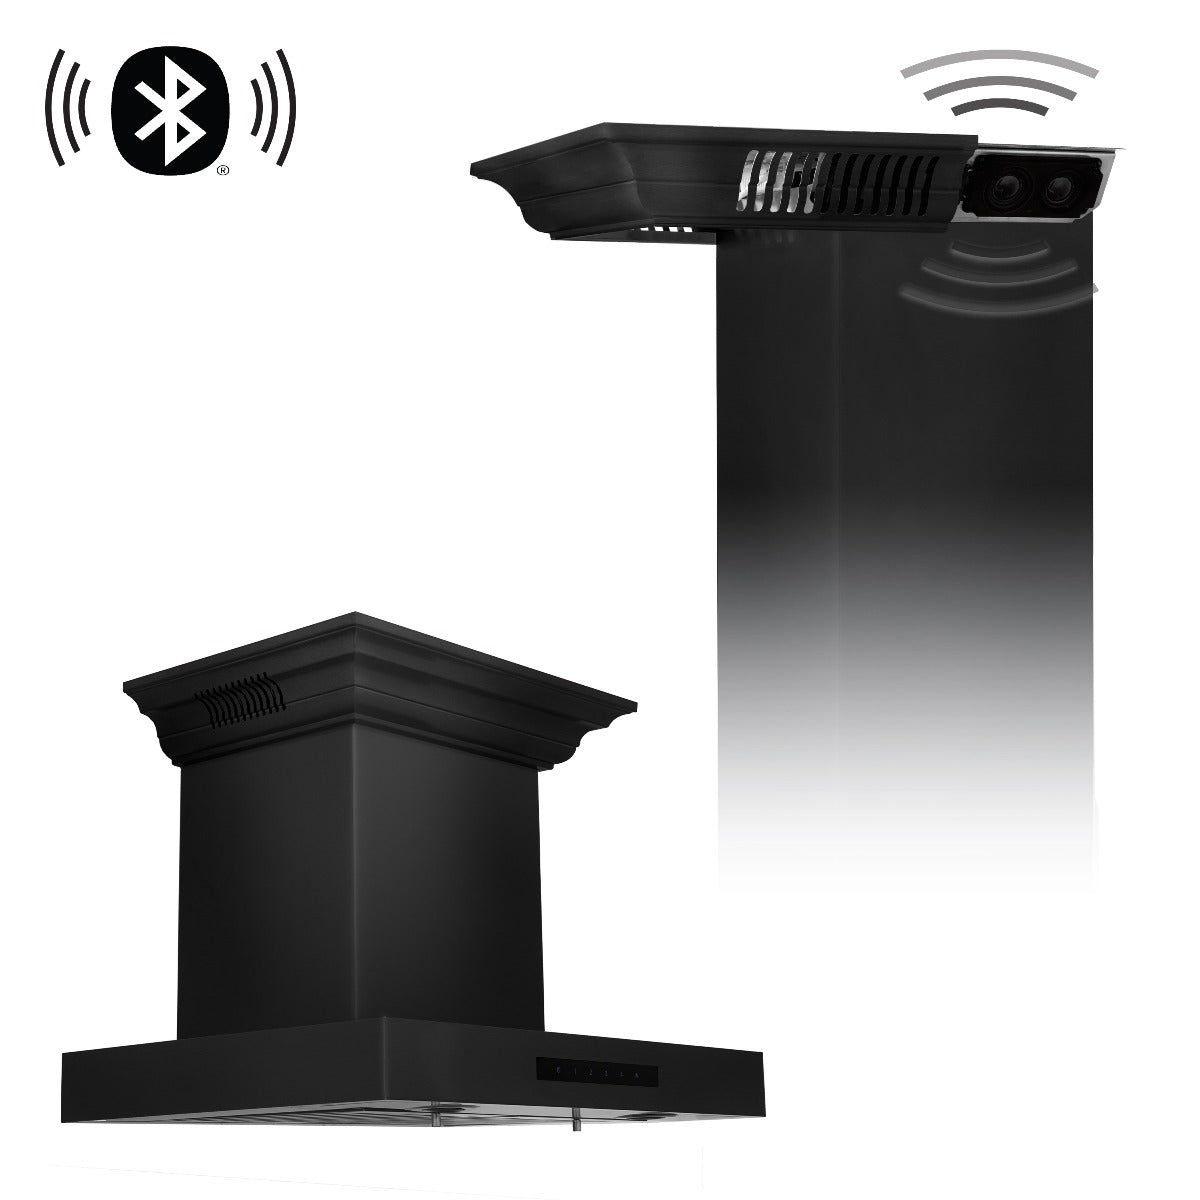 ZLINE 24 in. Wall Mount Range Hood in Black Stainless Steel with CrownSound® Speakers, BSKENCRN-BT-24